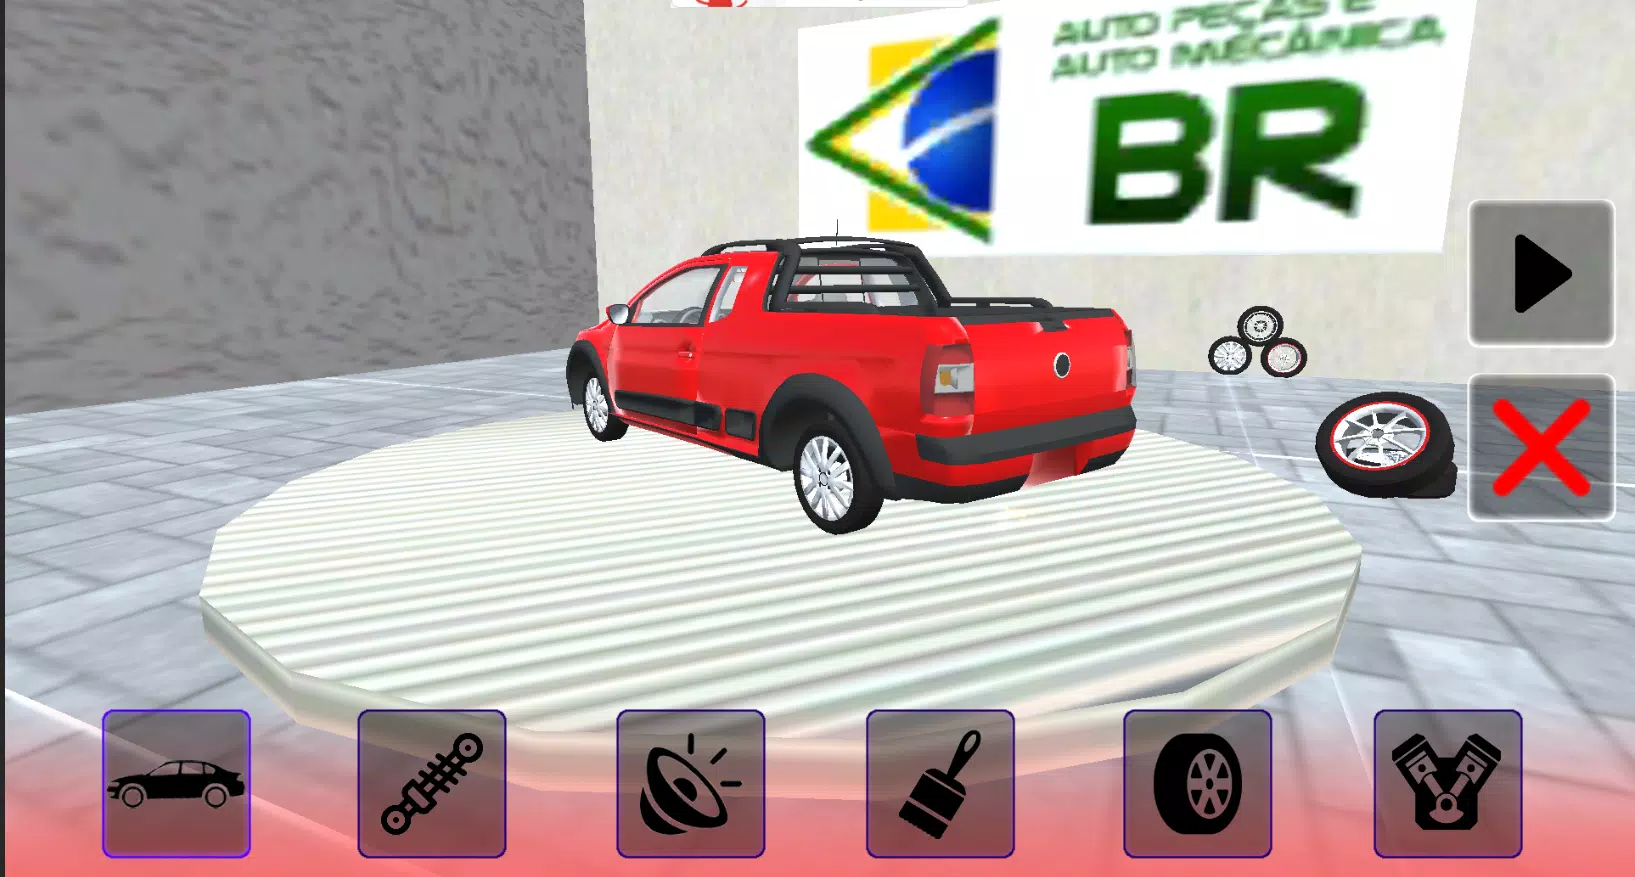 Carros Rebaixados BR APK - Free download for Android